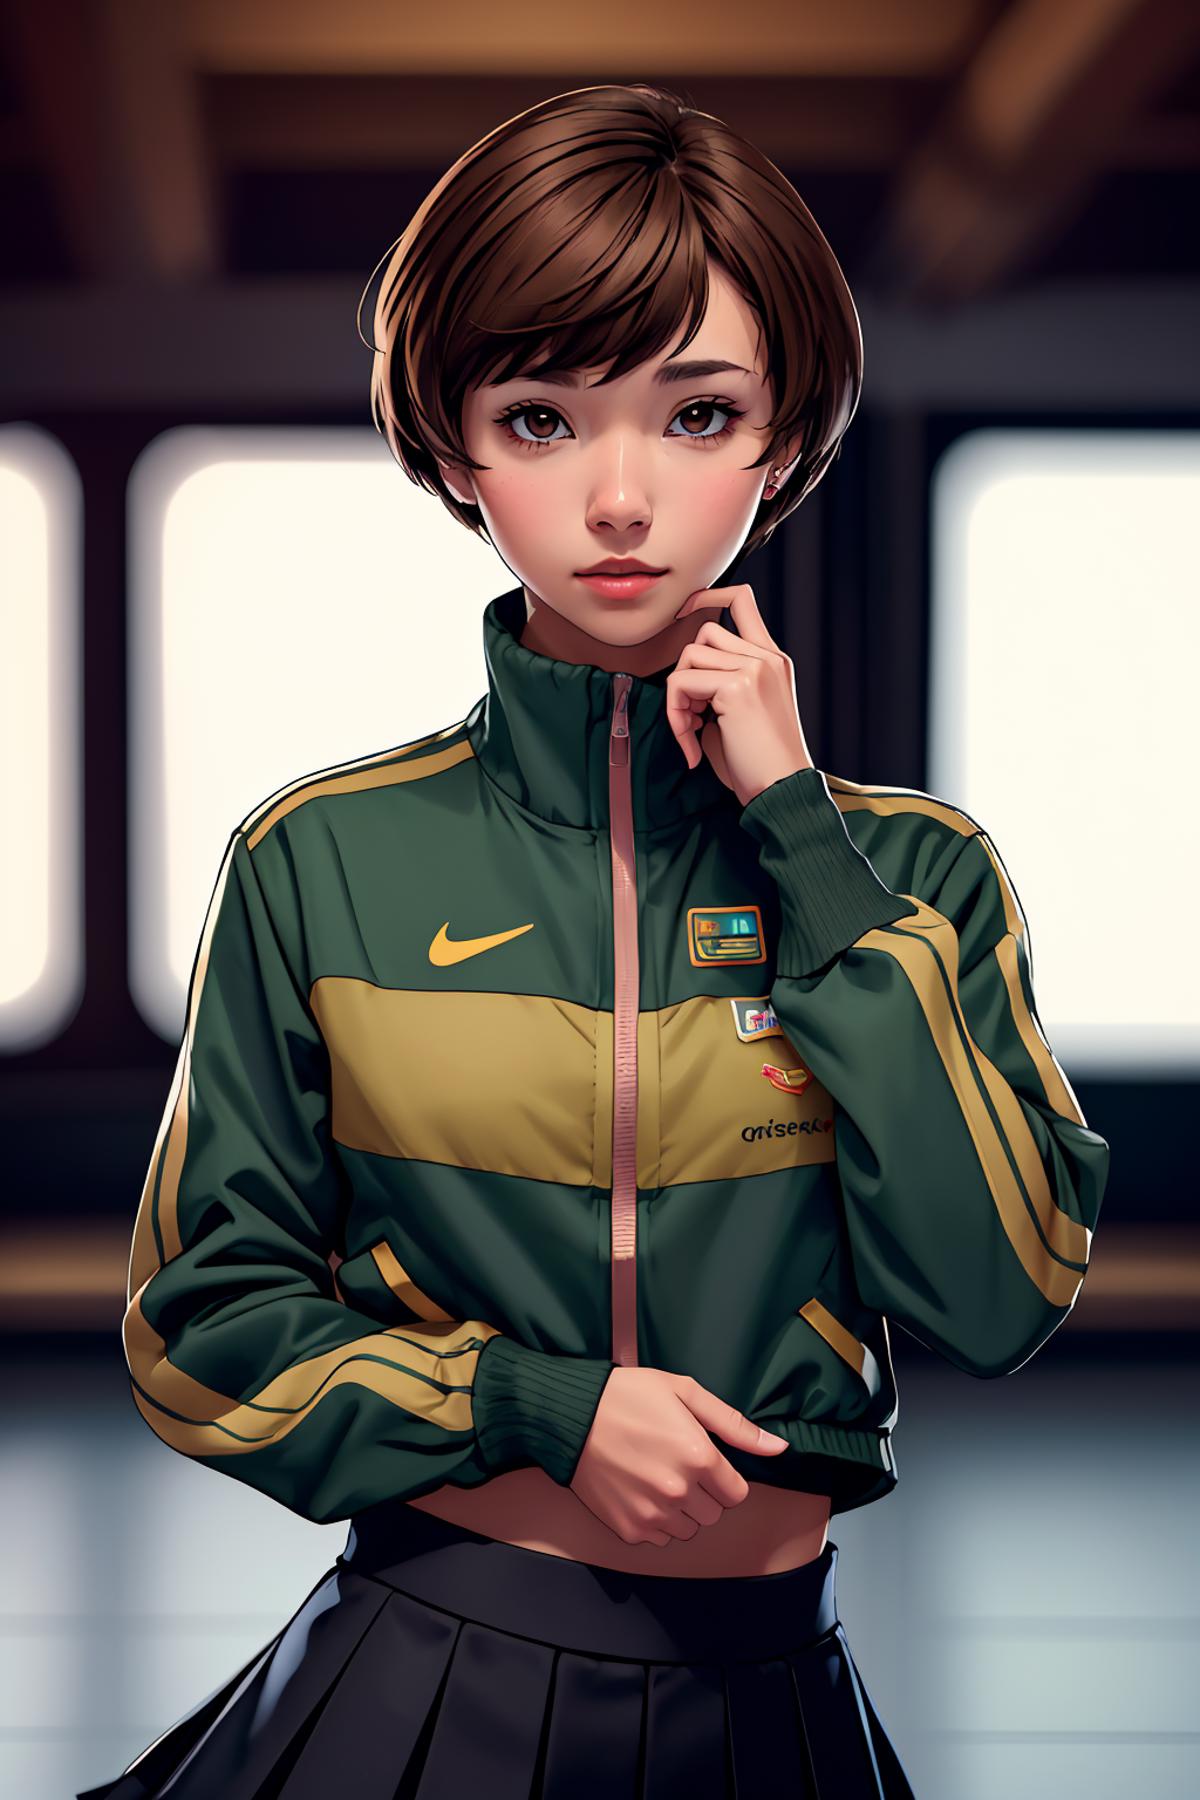 Chie Satonaka | Persona 4 image by FxMx23